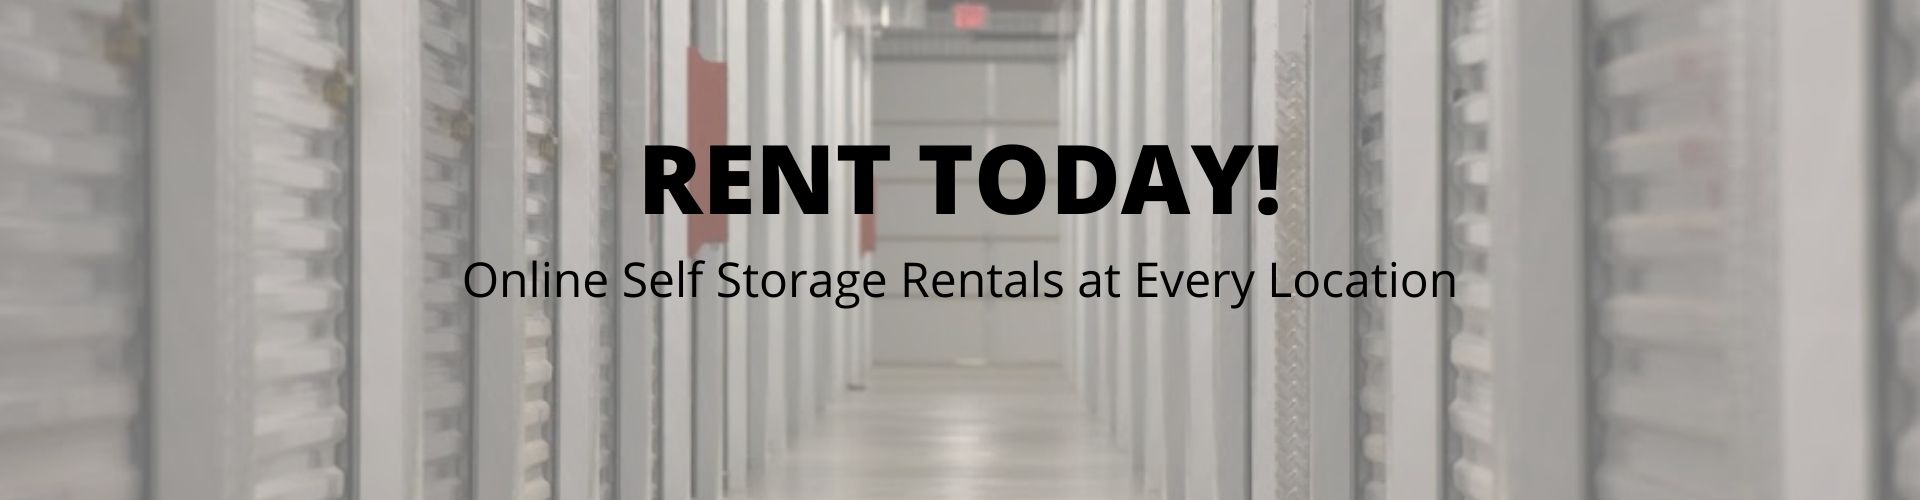 online storage rentals at Mountain West Self Storage in Idaho and Utah